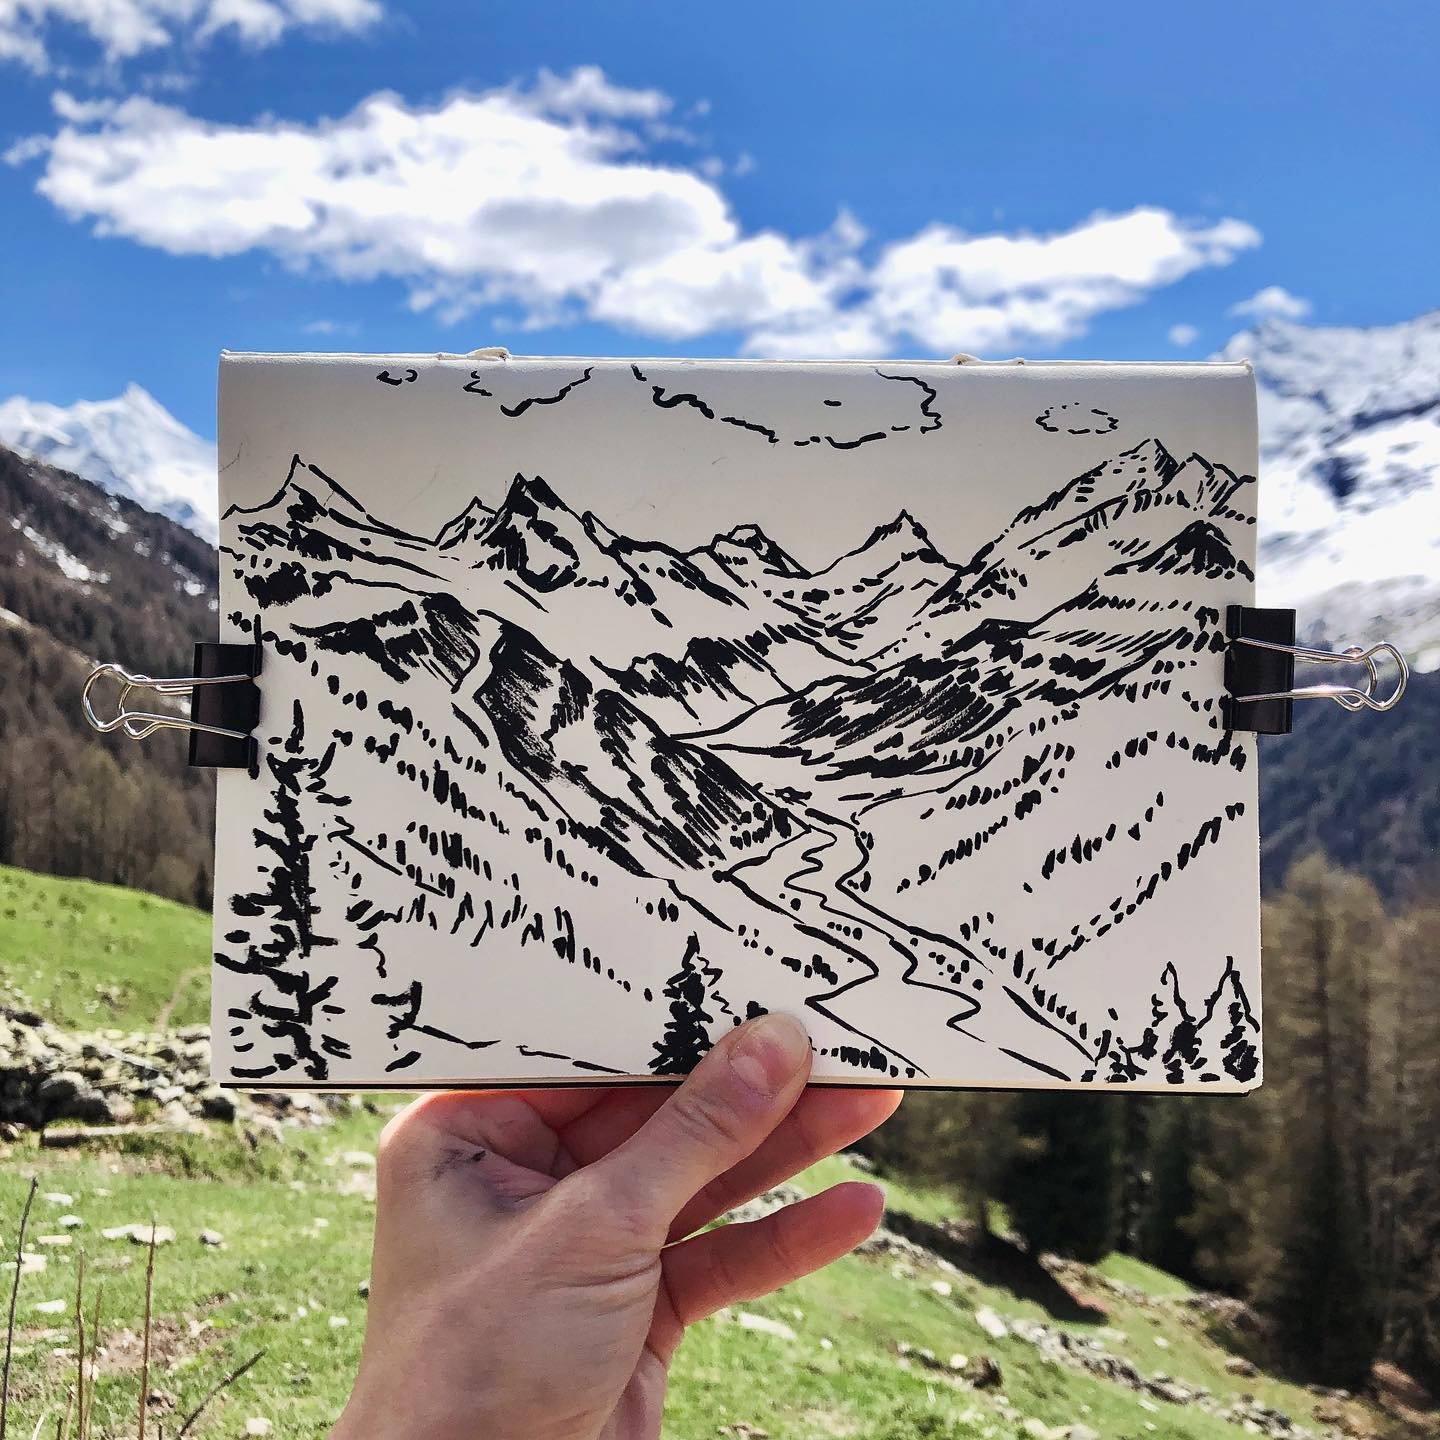 Magnifique vue sur les 4000 dans le Val d'Anniviers 🏔️ #zinalrothorn #besso #obergabelhorn #cervin #dentblanche 
.
.
.
#outdoorsketching #sketchbook #valdanniviers #stluc #ayer #mottec #suisserando #iloveswitzerland #swissillustrator #hikingswitzerl